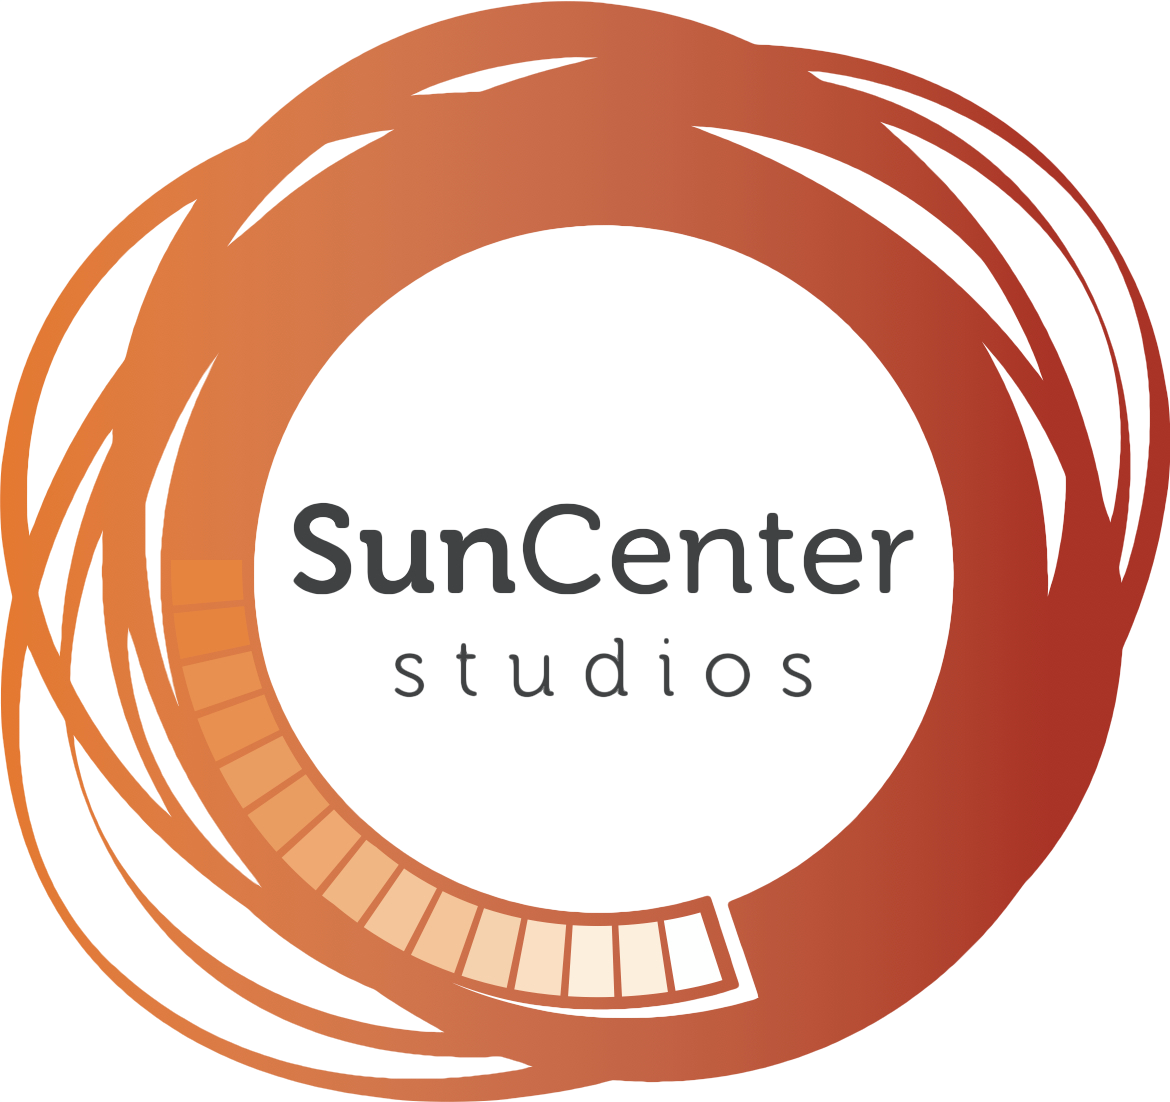 Sun Center Studios